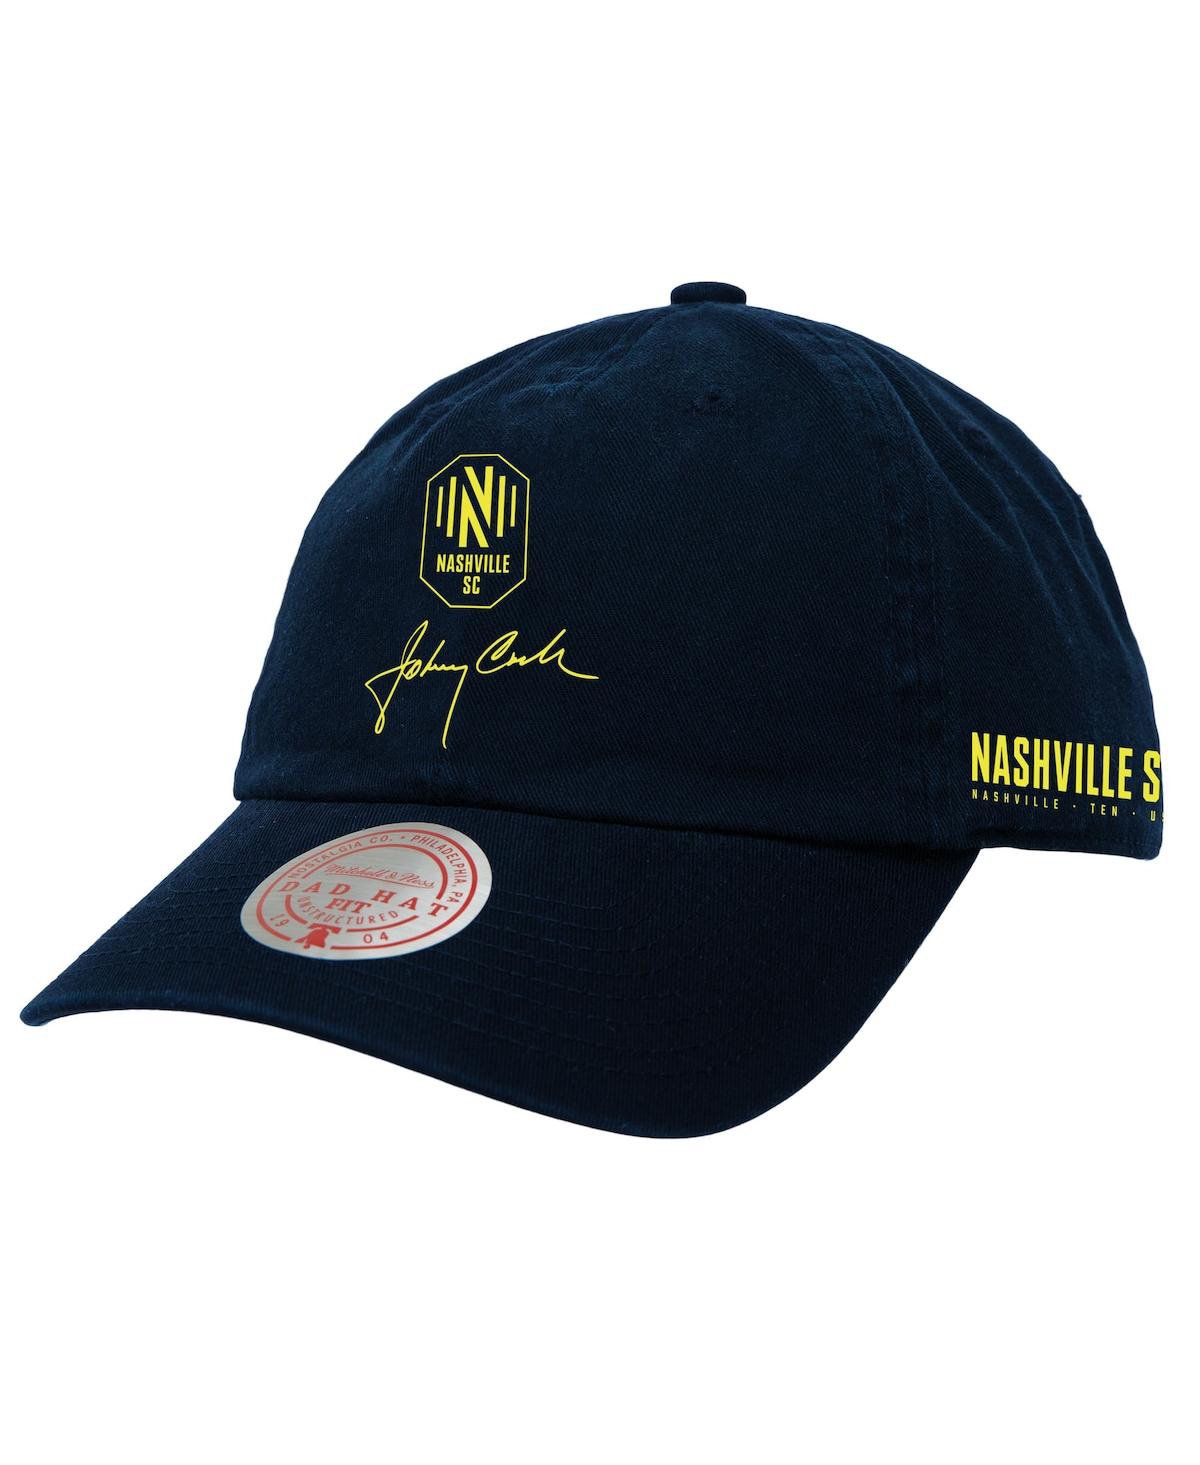 Mitchell Ness Men's Navy Nashville Sc x Johnny Cash Adjustable Dad Hat - Navy